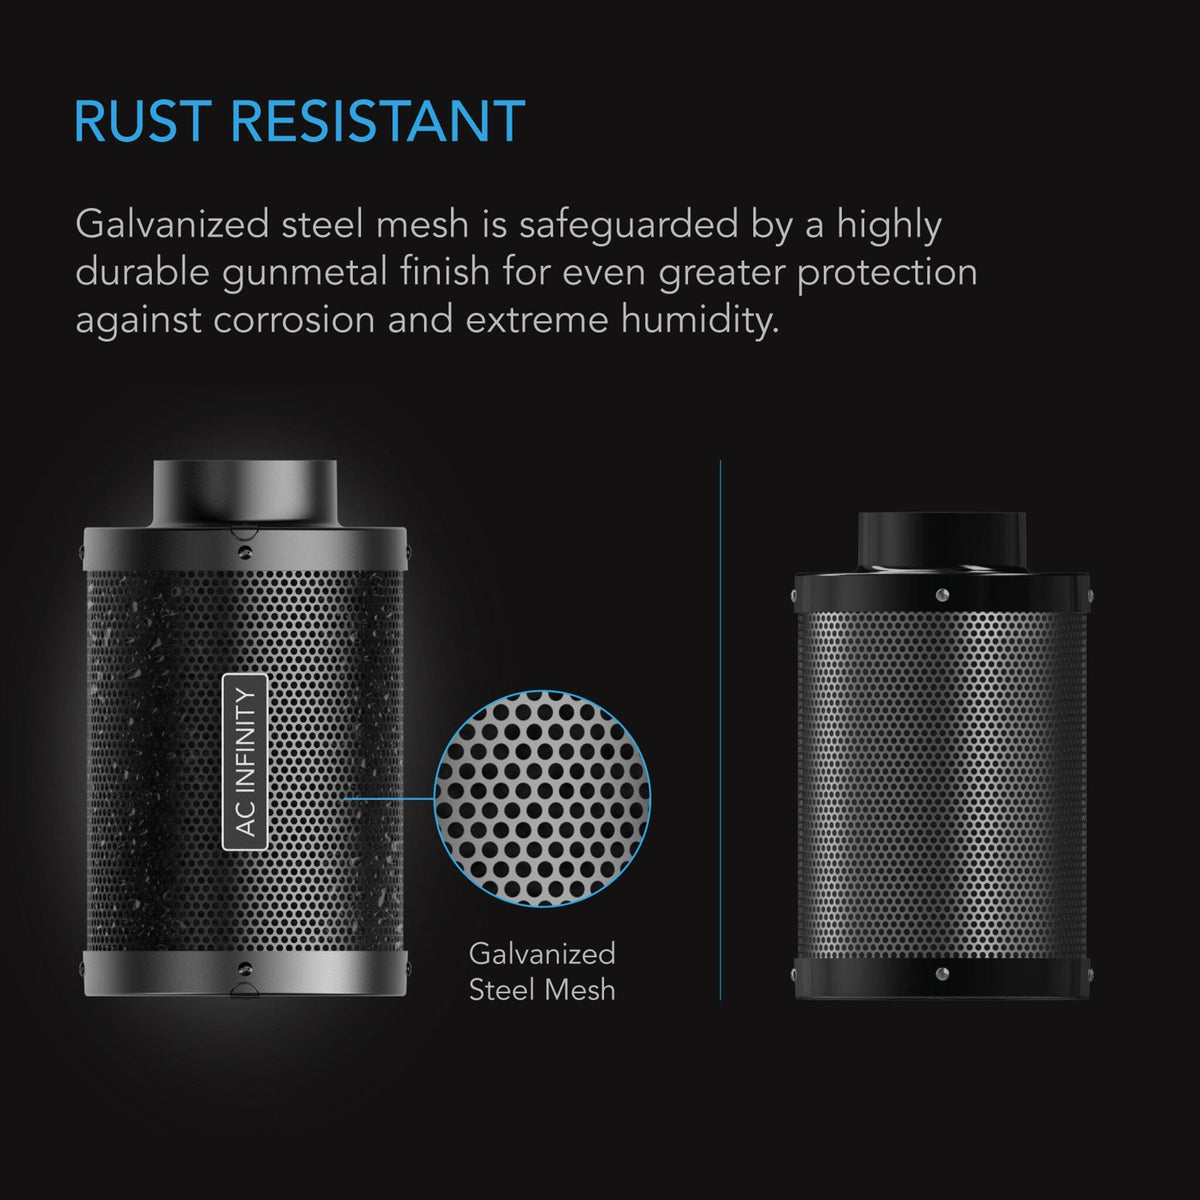 Rust resistant steel mesh